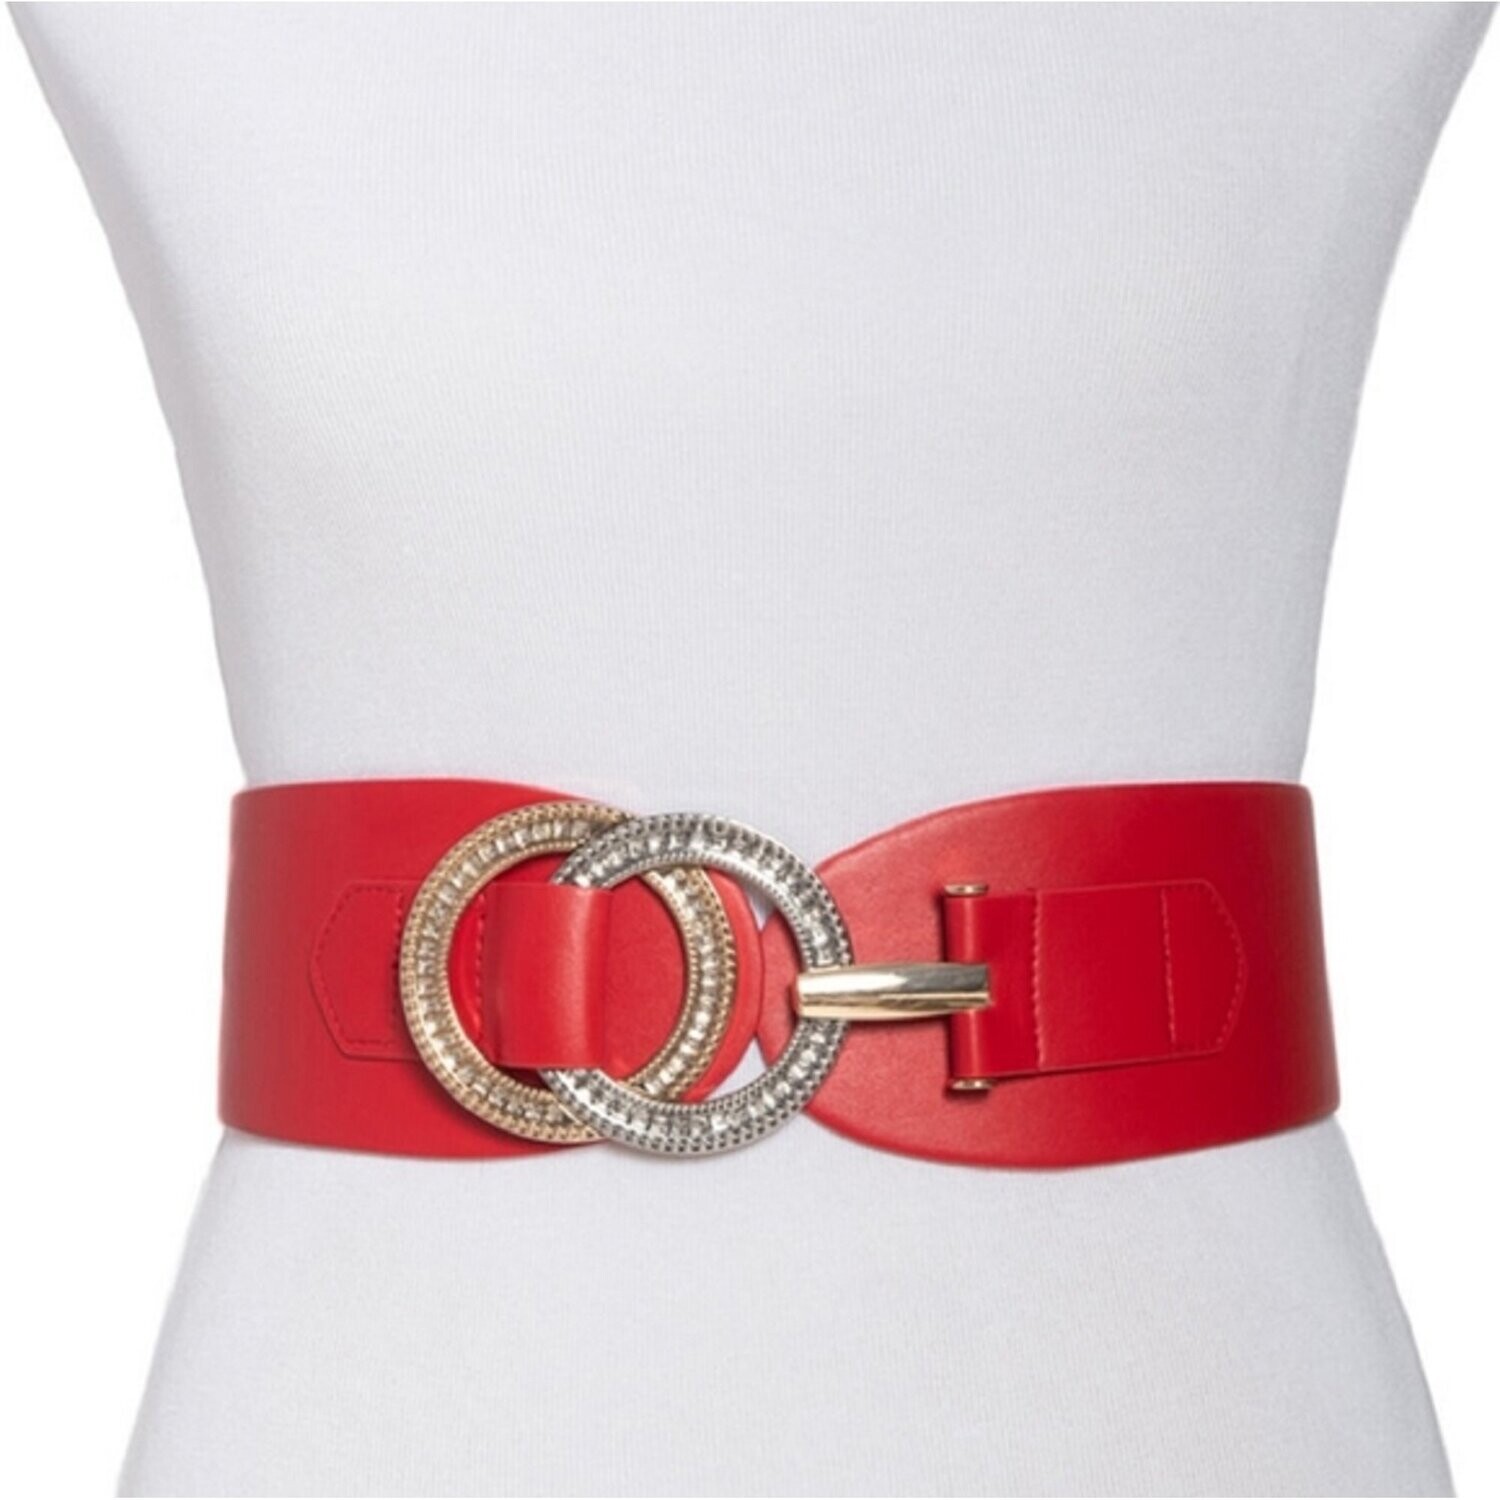 International Concepts Double-Ring Rhinestone Interlock Leather Stretch Belt, Red S/M